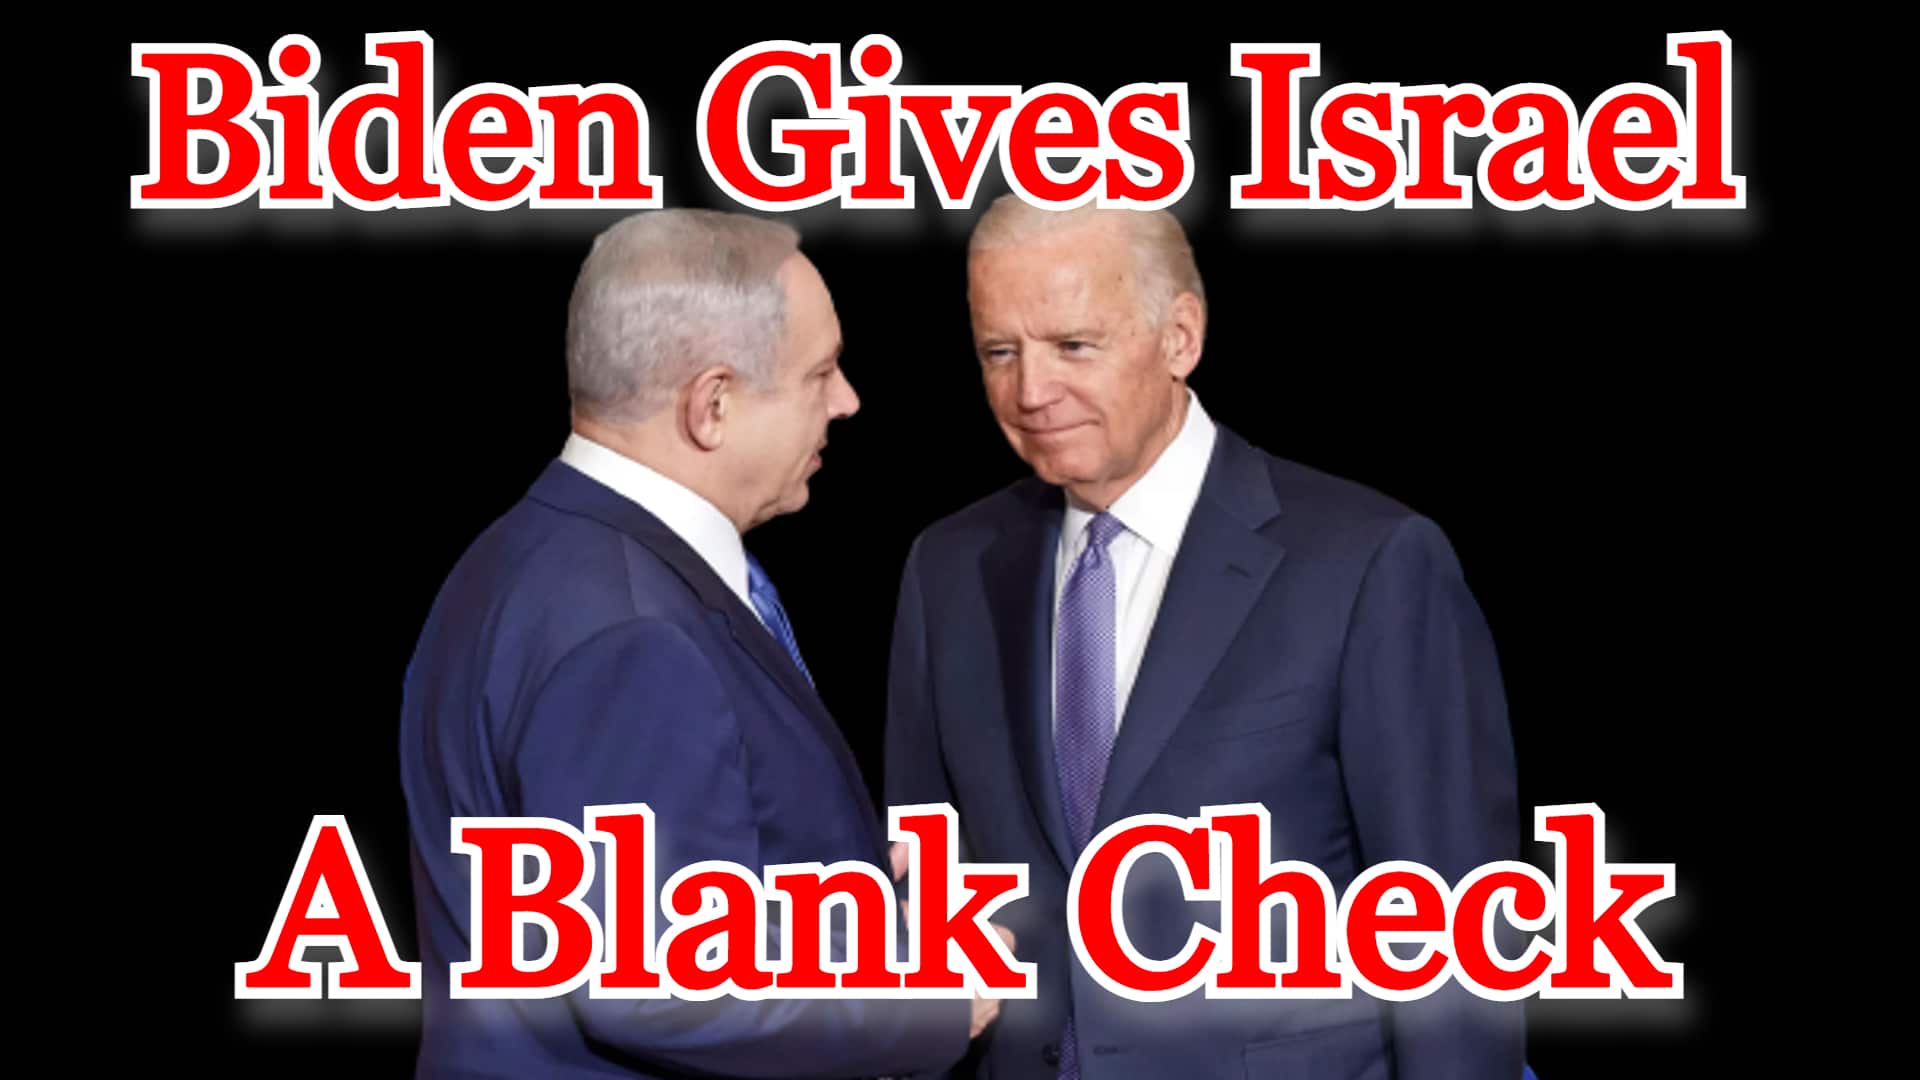 COI #388: Biden Gives Israel a Blank Check